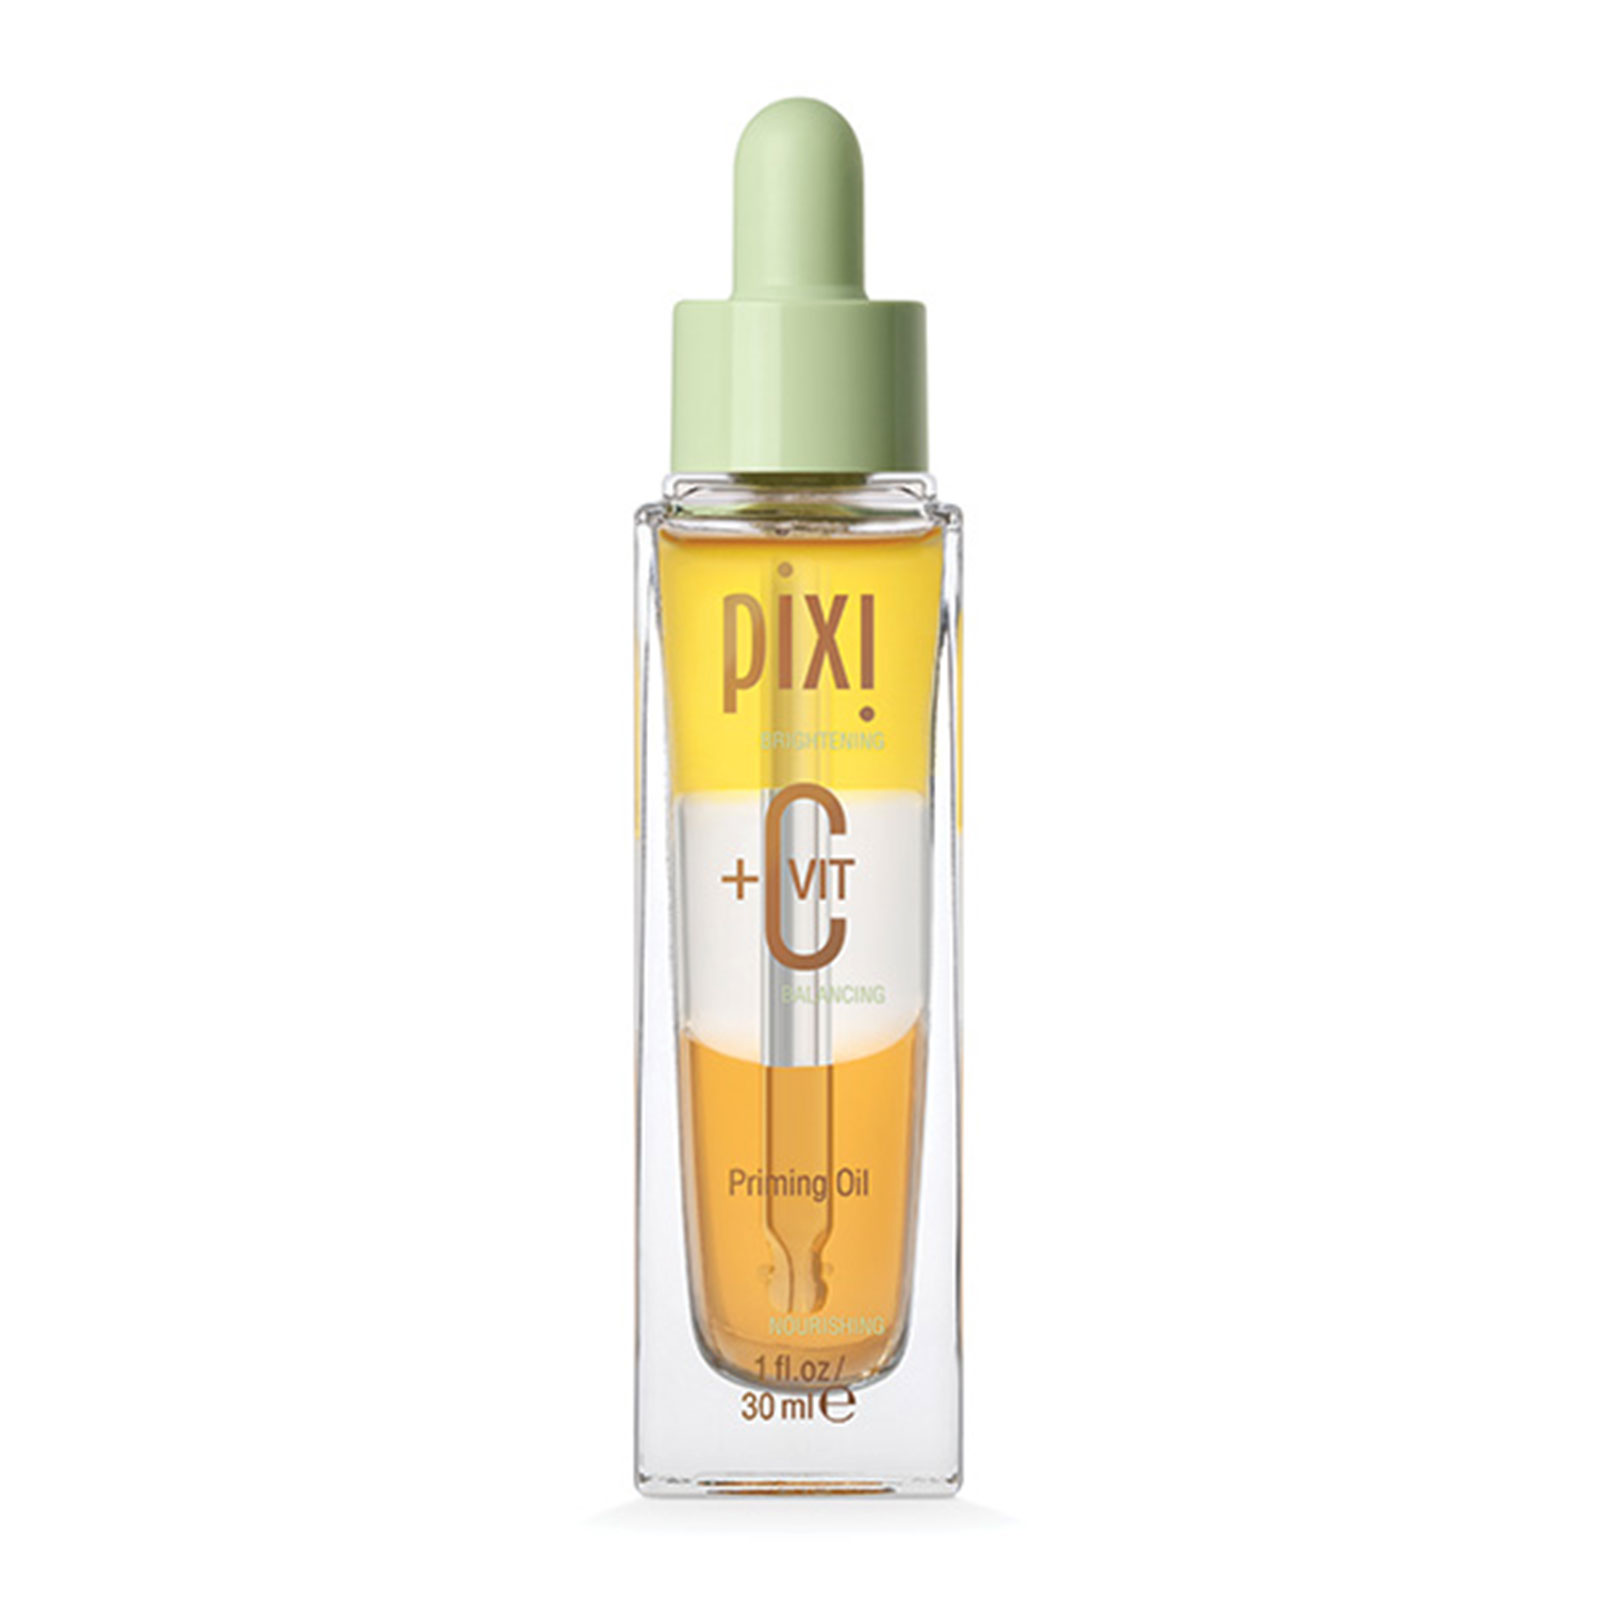 Pixi Beauty +C Vit Priming Oil 30Ml